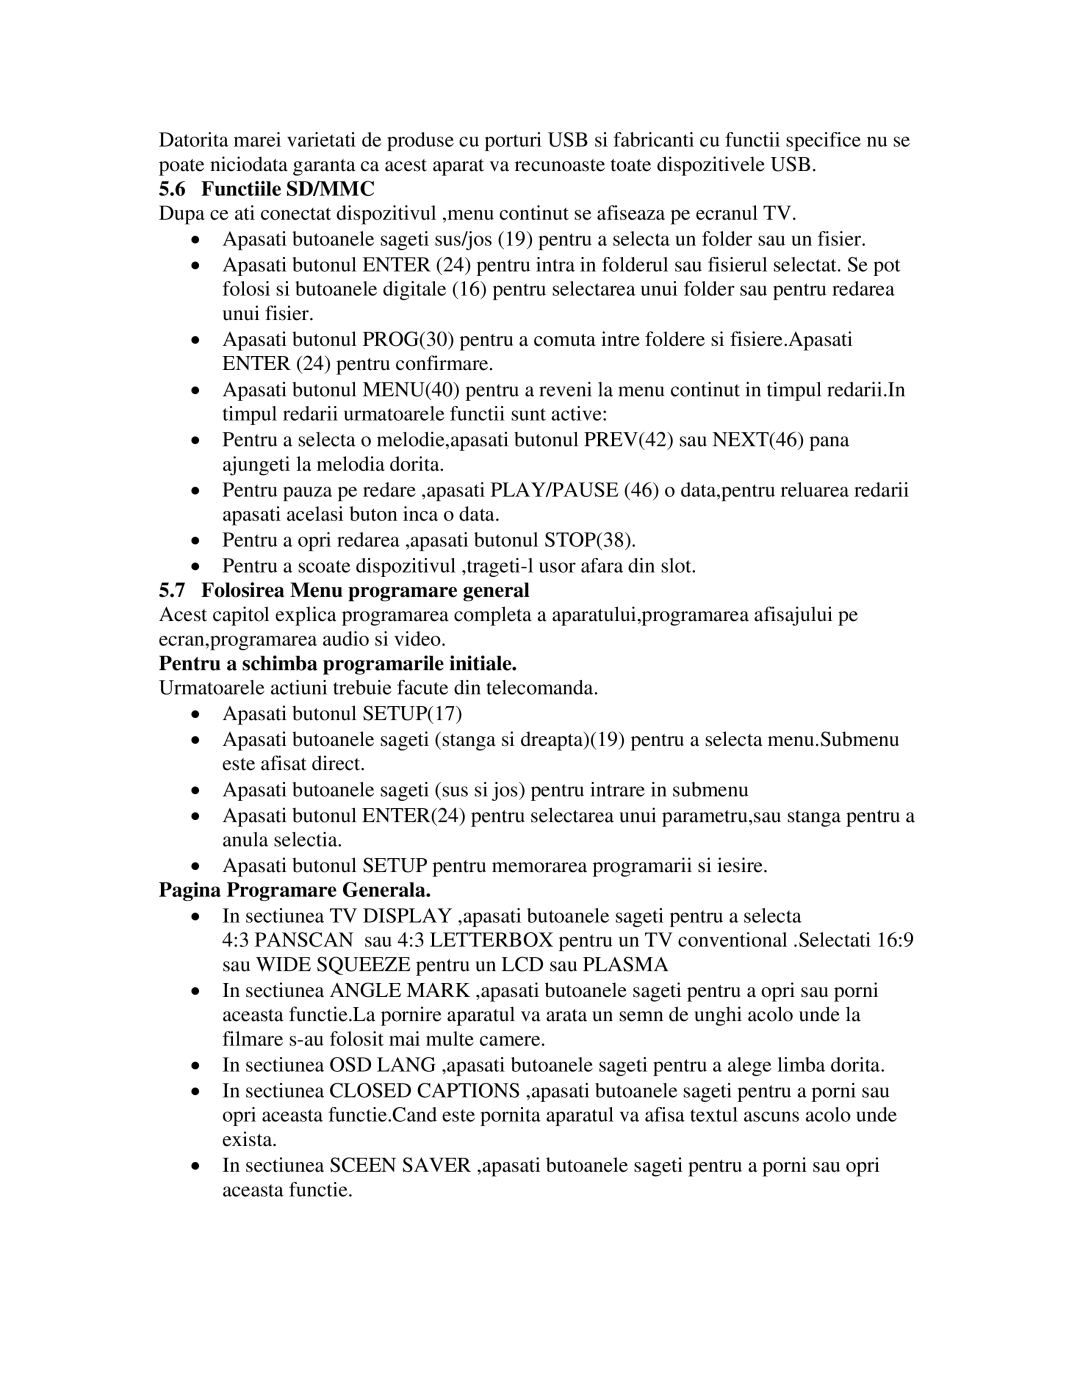 Akai AMD20 manual Functiile SD/MMC, 5.7Folosirea Menu programare general, Pagina Programare Generala 